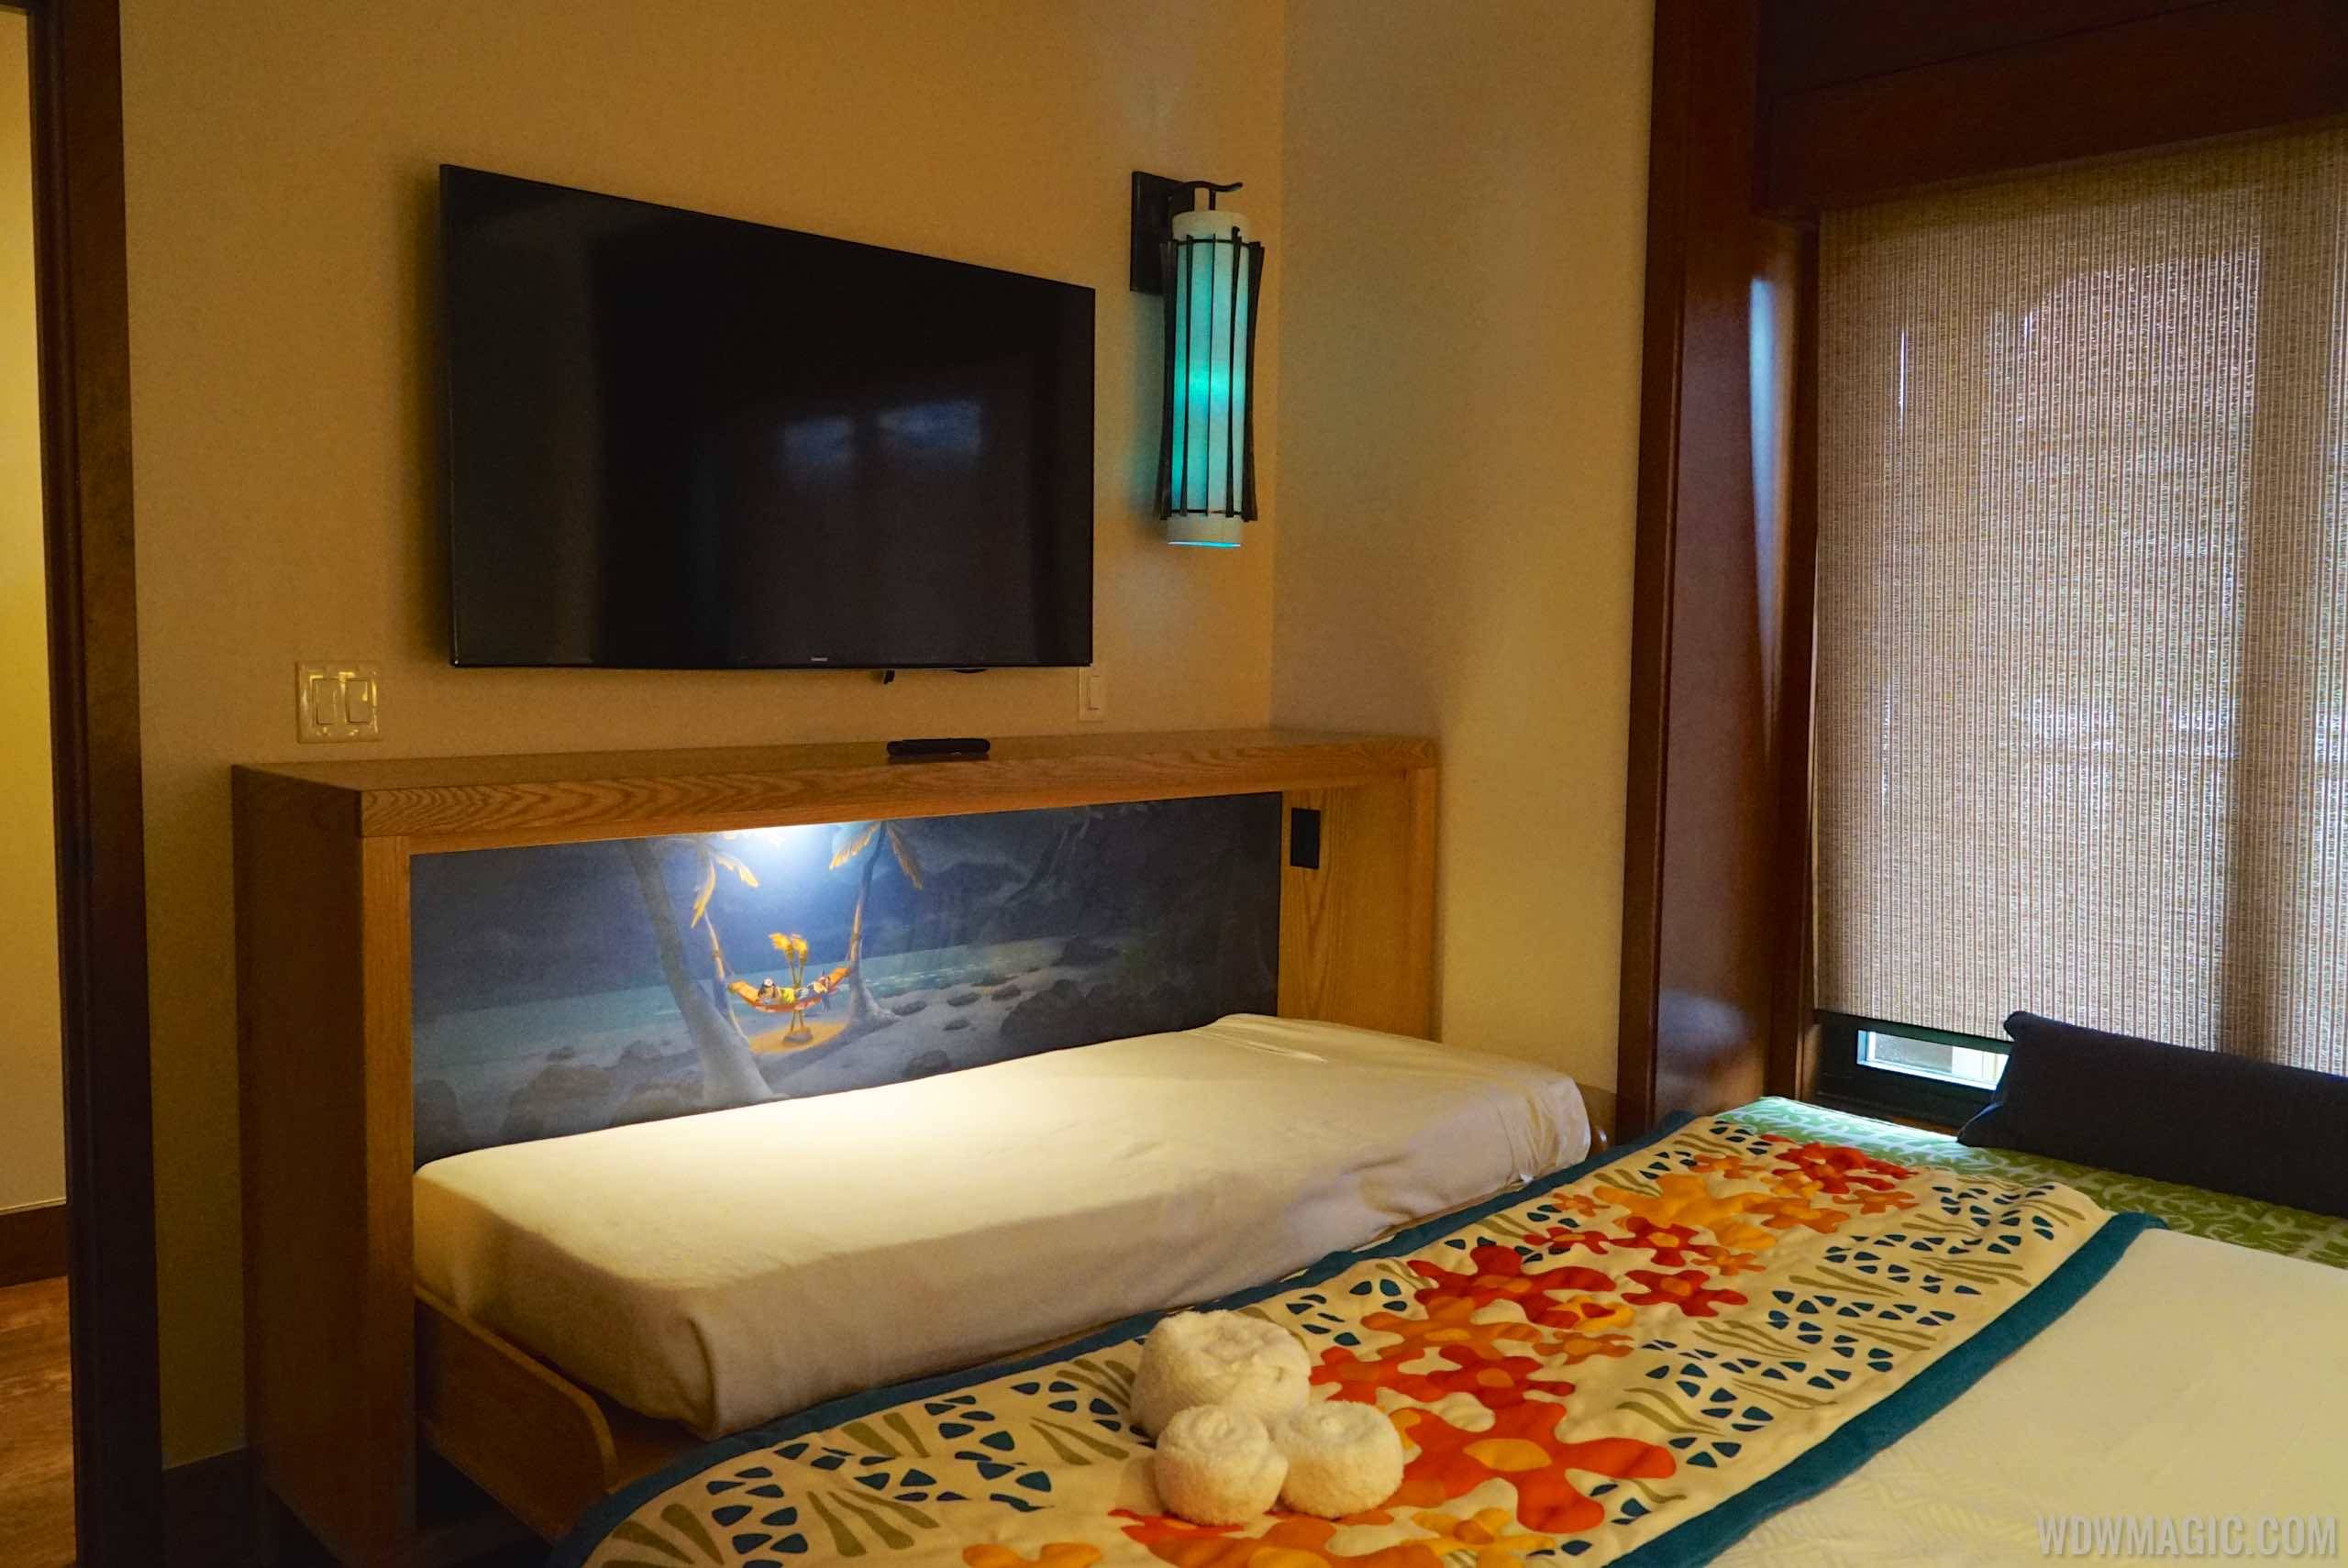 Disney's Polynesian Village Resort Bora Bora Bungalow - Fold down bed in second bedroom